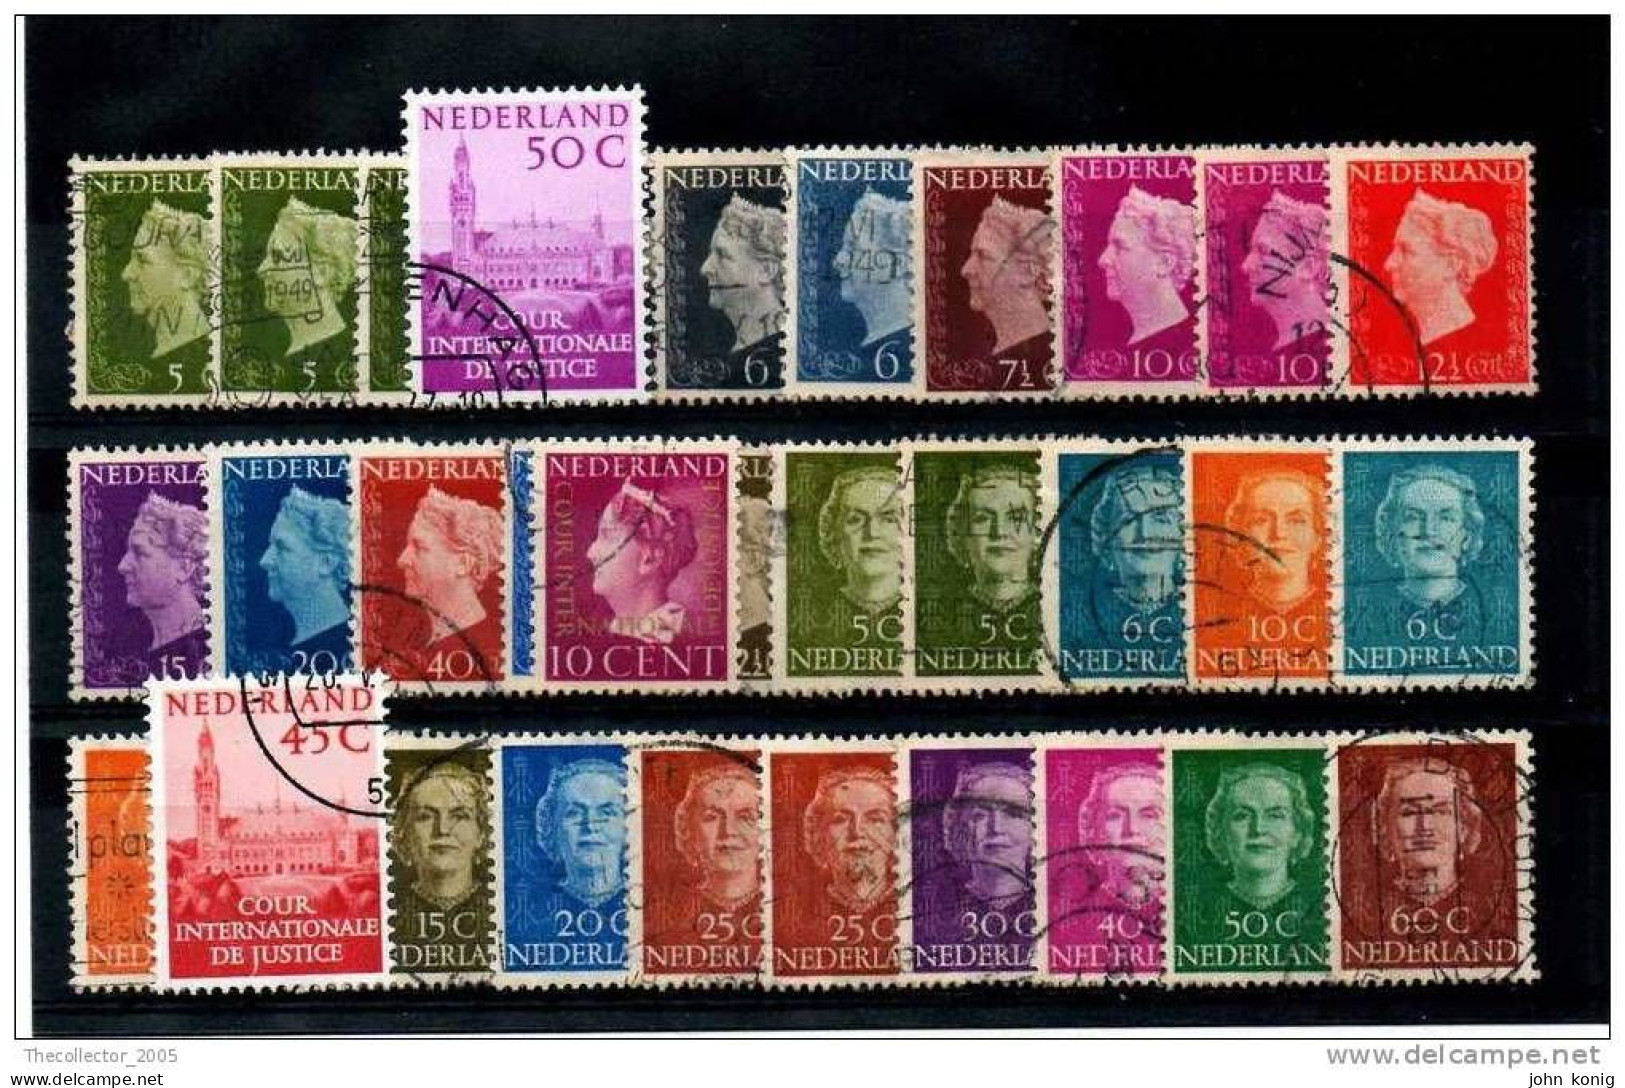 OLANDA - PAESI BASSI - HOLLAND - NEDERLAND - Lotto Francobolli - Stamps Lot - Sammlungen